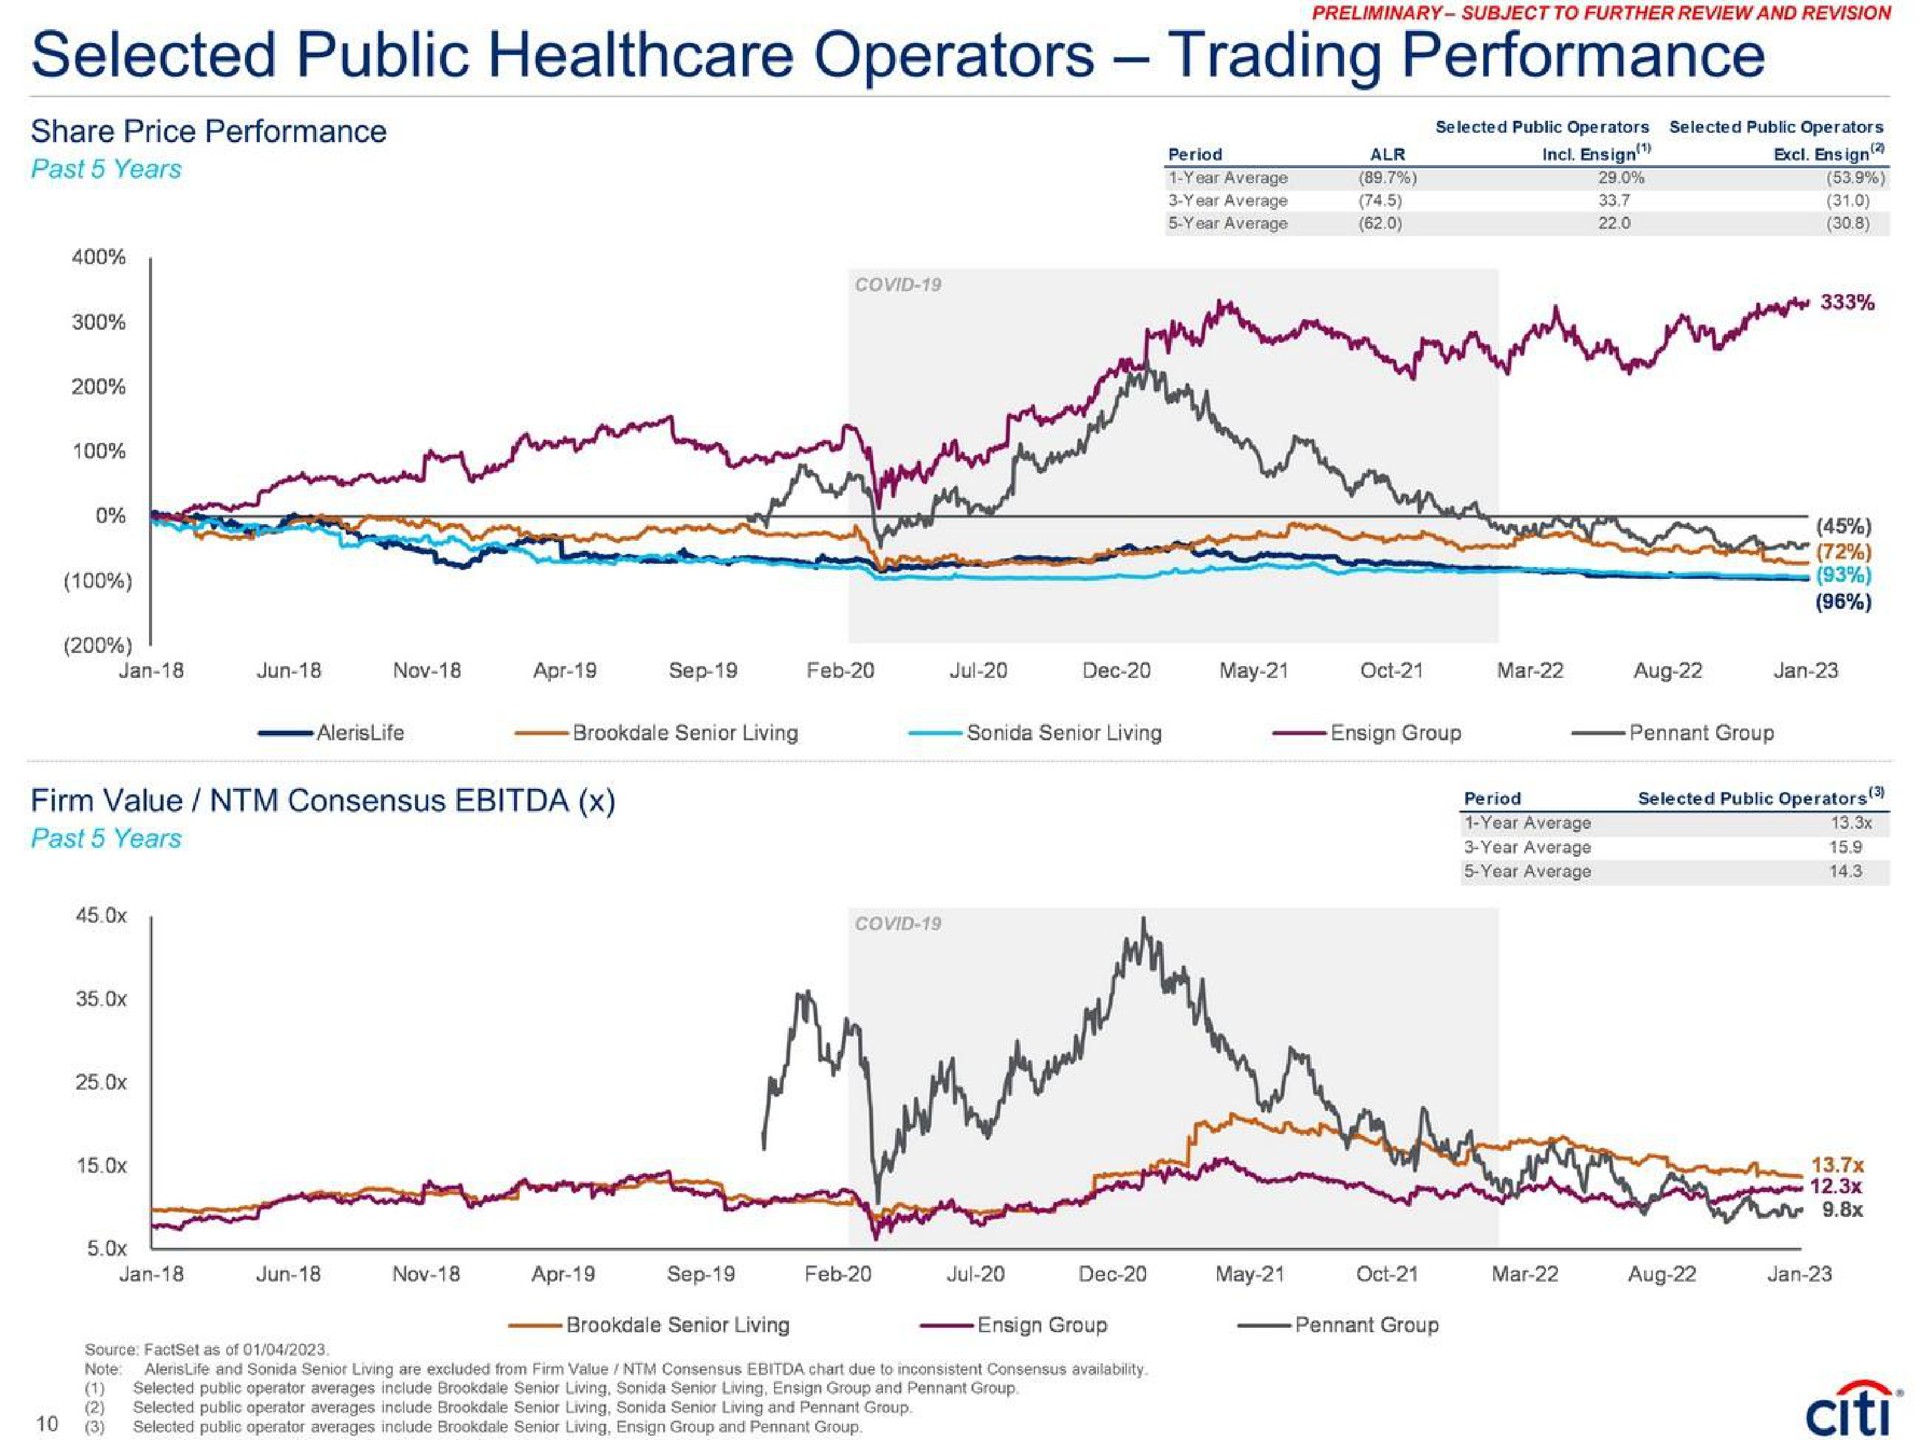 selected public operators trading performance pity a firm value consensus period selected public operators ere a a a | Citi